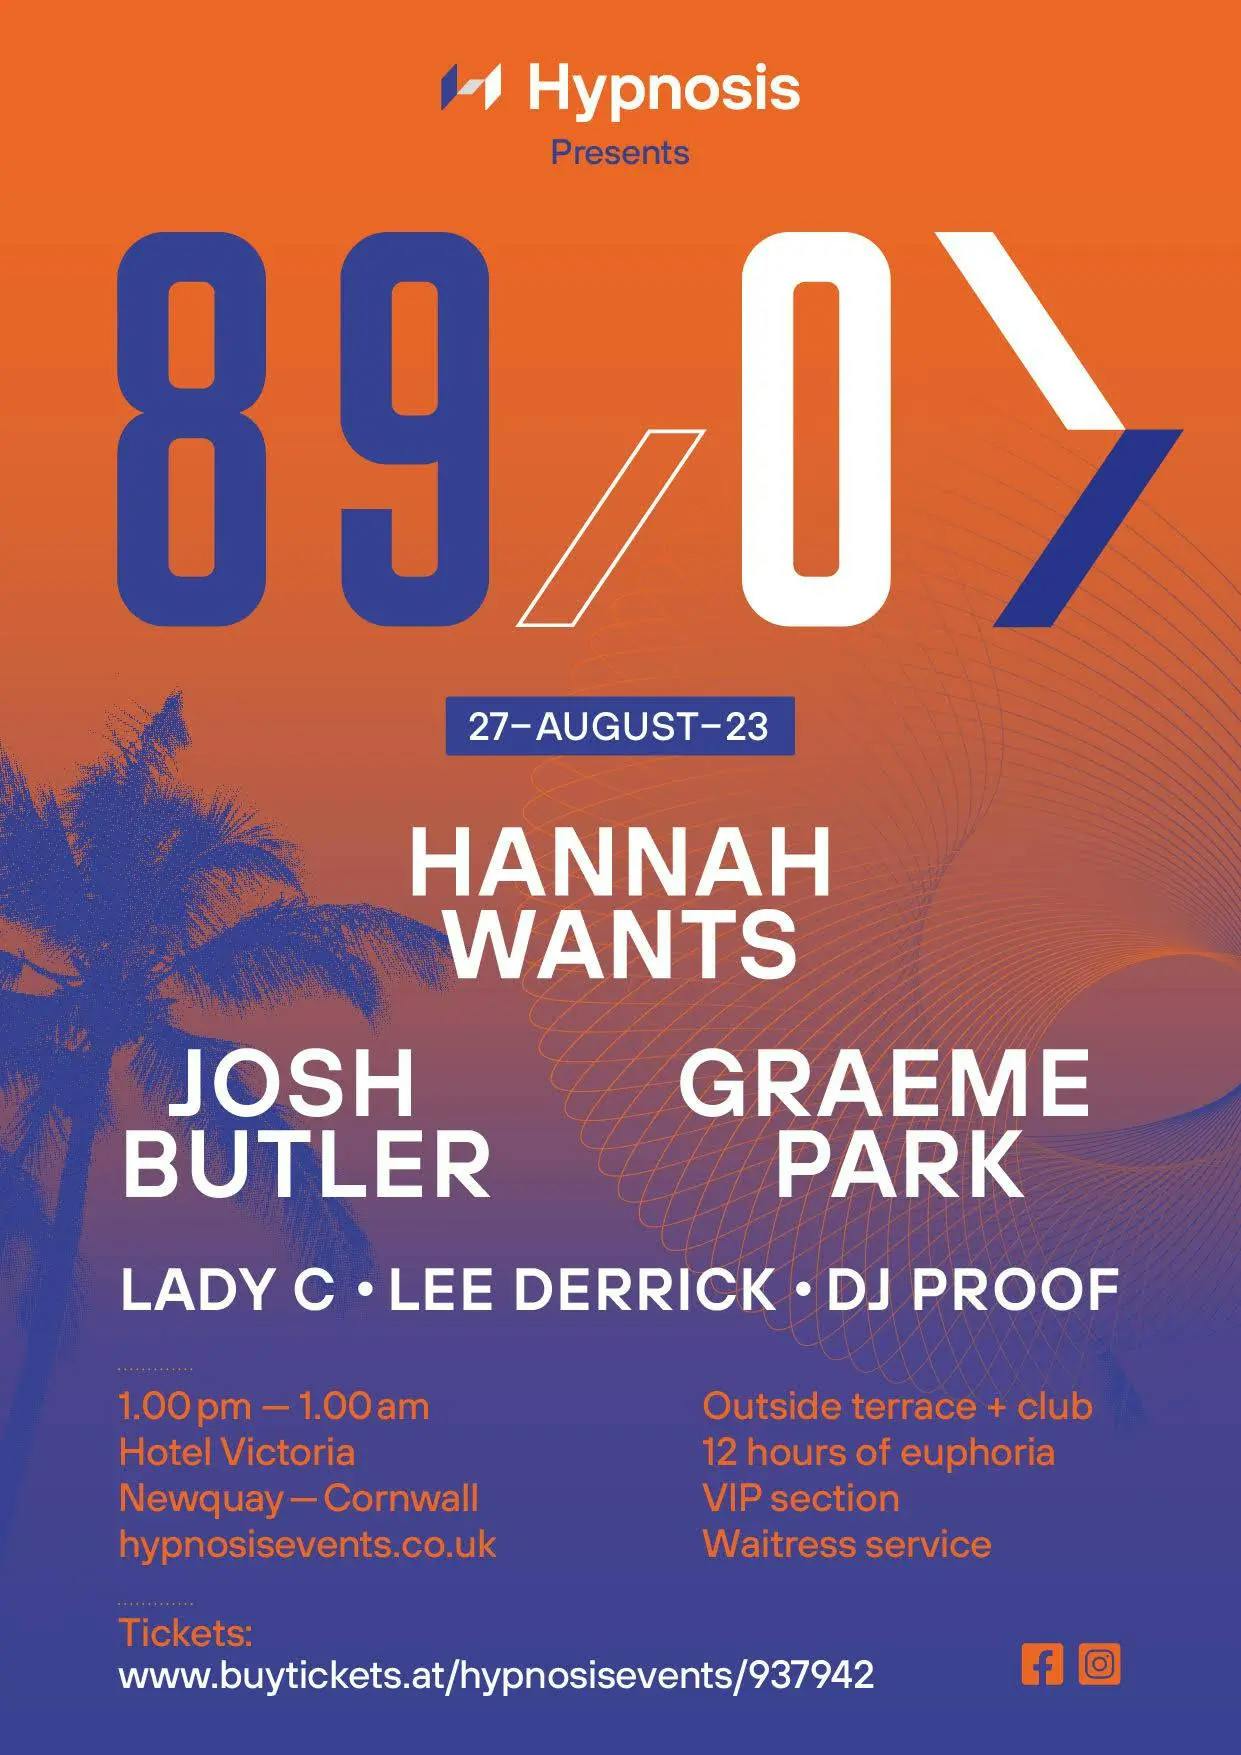 89/0 event